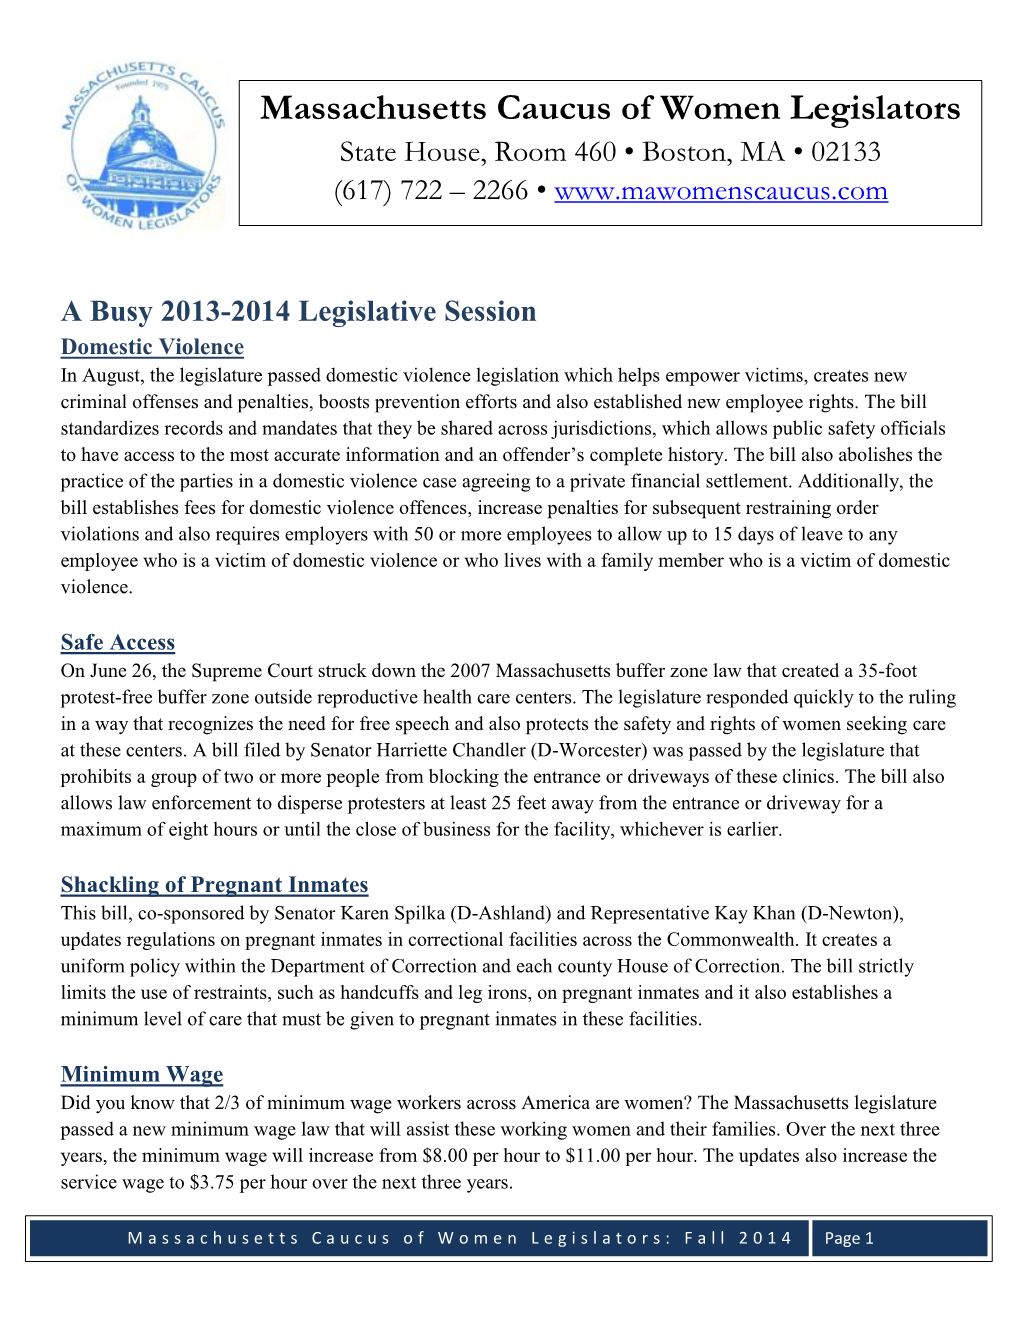 Massachusetts Caucus of Women Legislators State House, Room 460 • Boston, MA • 02133